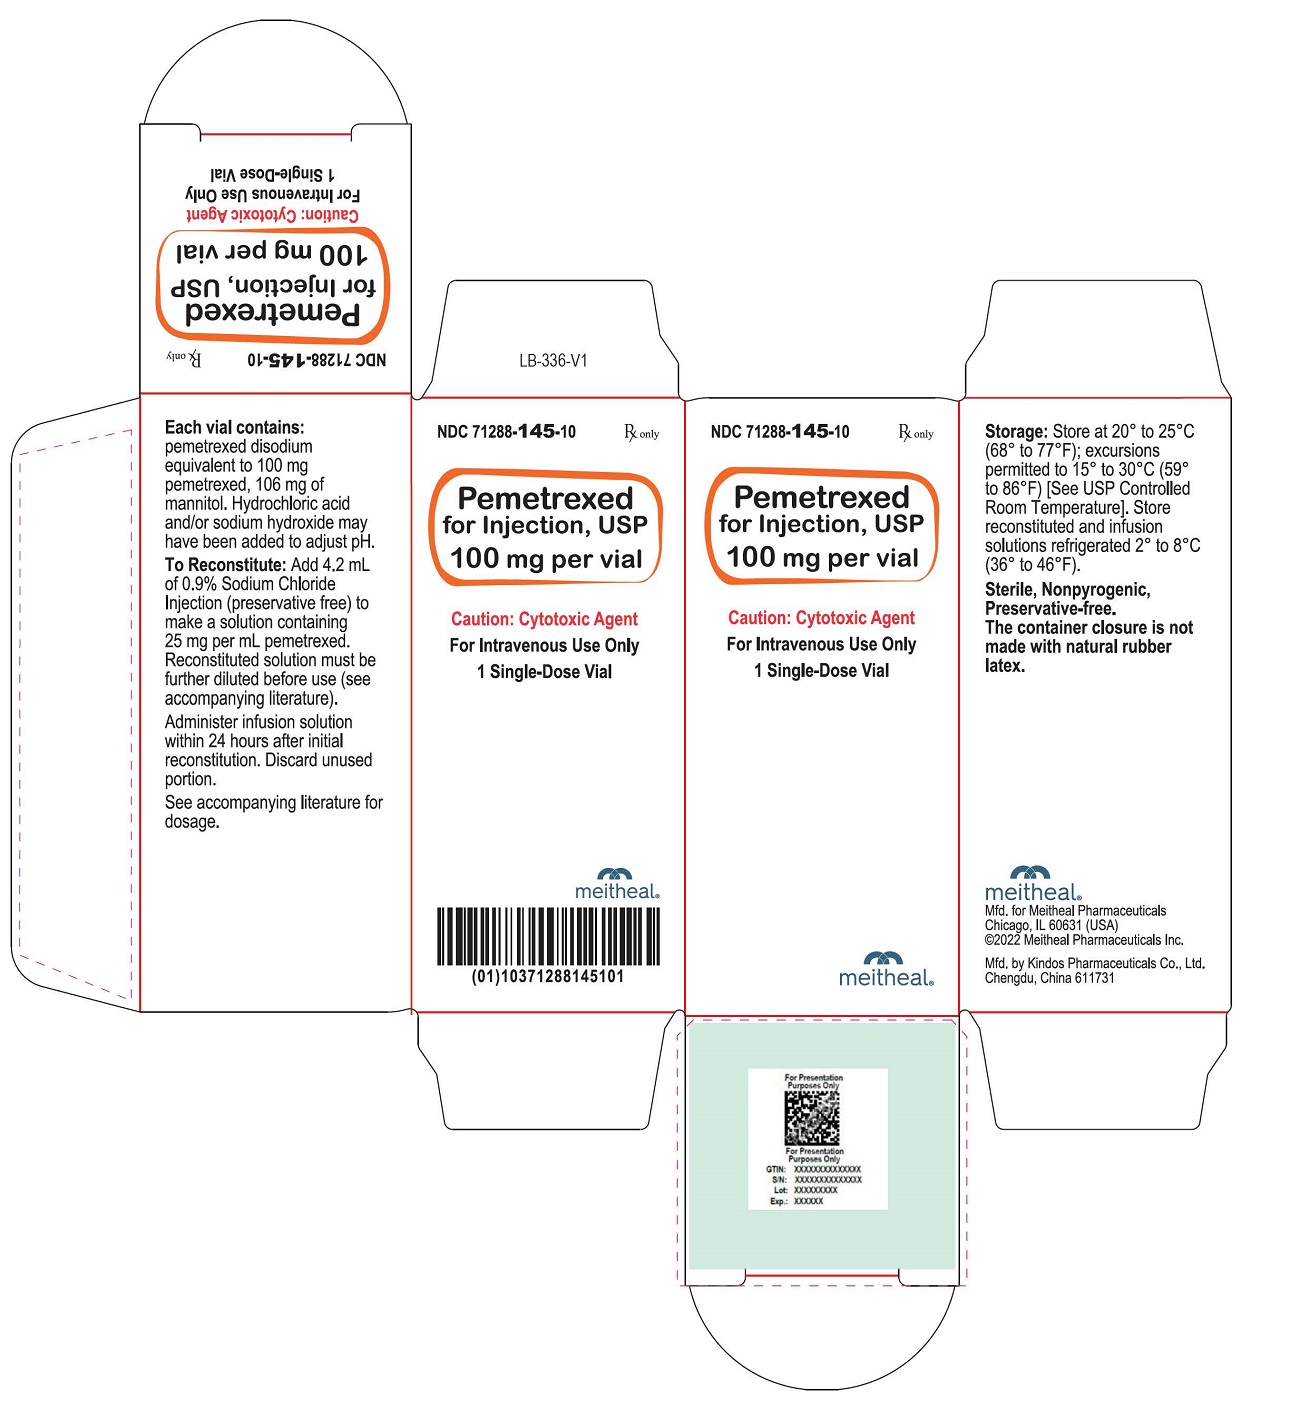 PRINCIPAL DISPLAY PANEL – Pemetrexed for Injection, USP 100 mg Carton